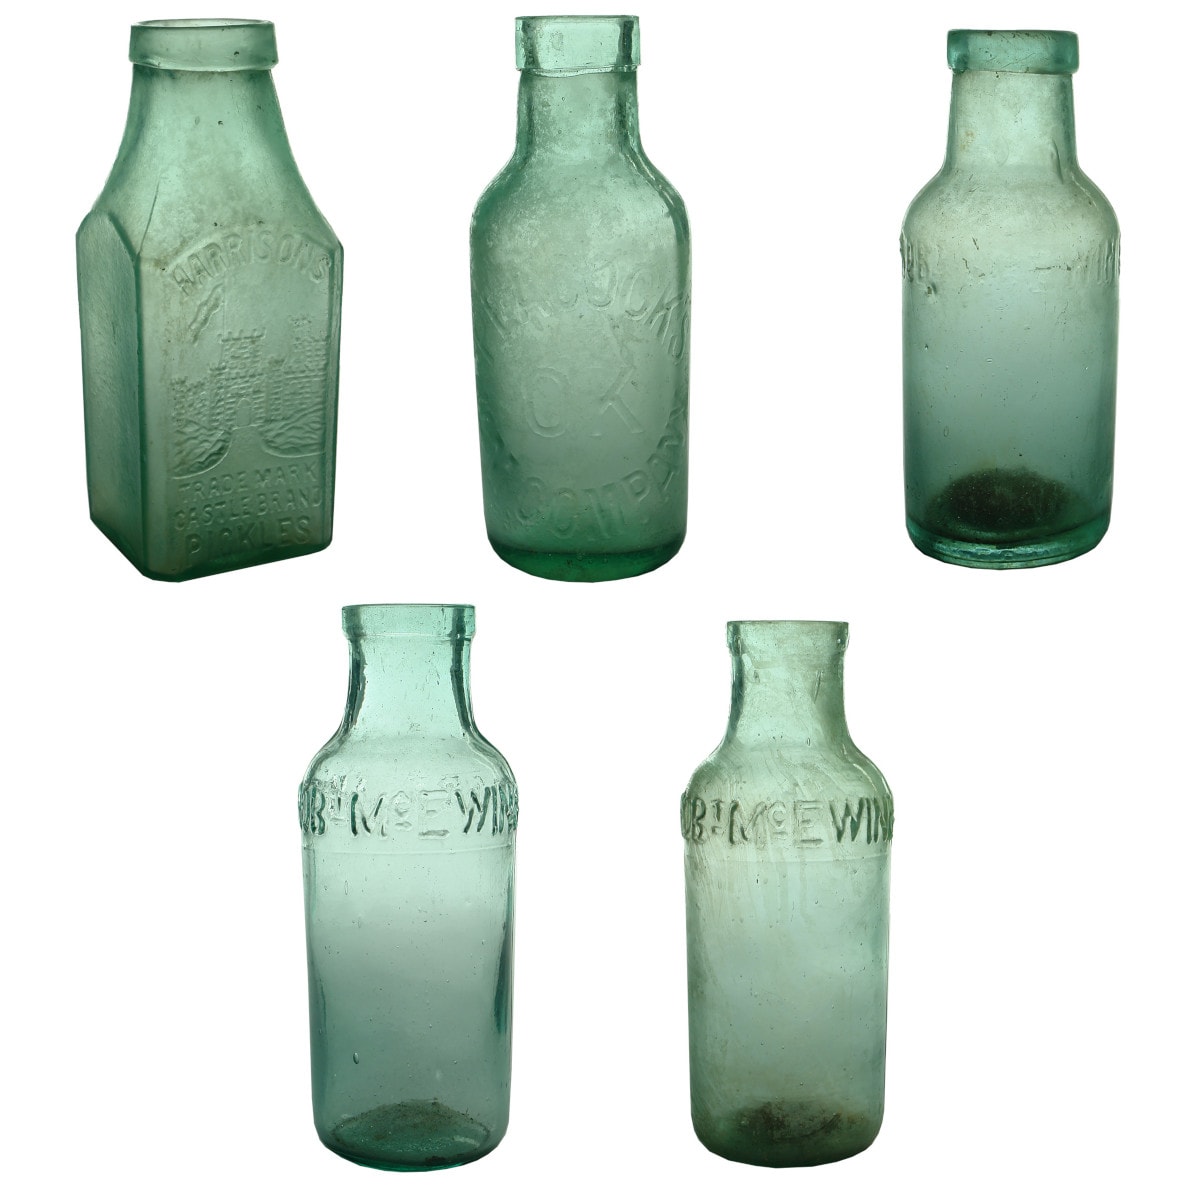 Five Pickle Bottles: Harrison's Castle Brand; OK Jam Company; 3 x Robt McEwin, Adelaide.